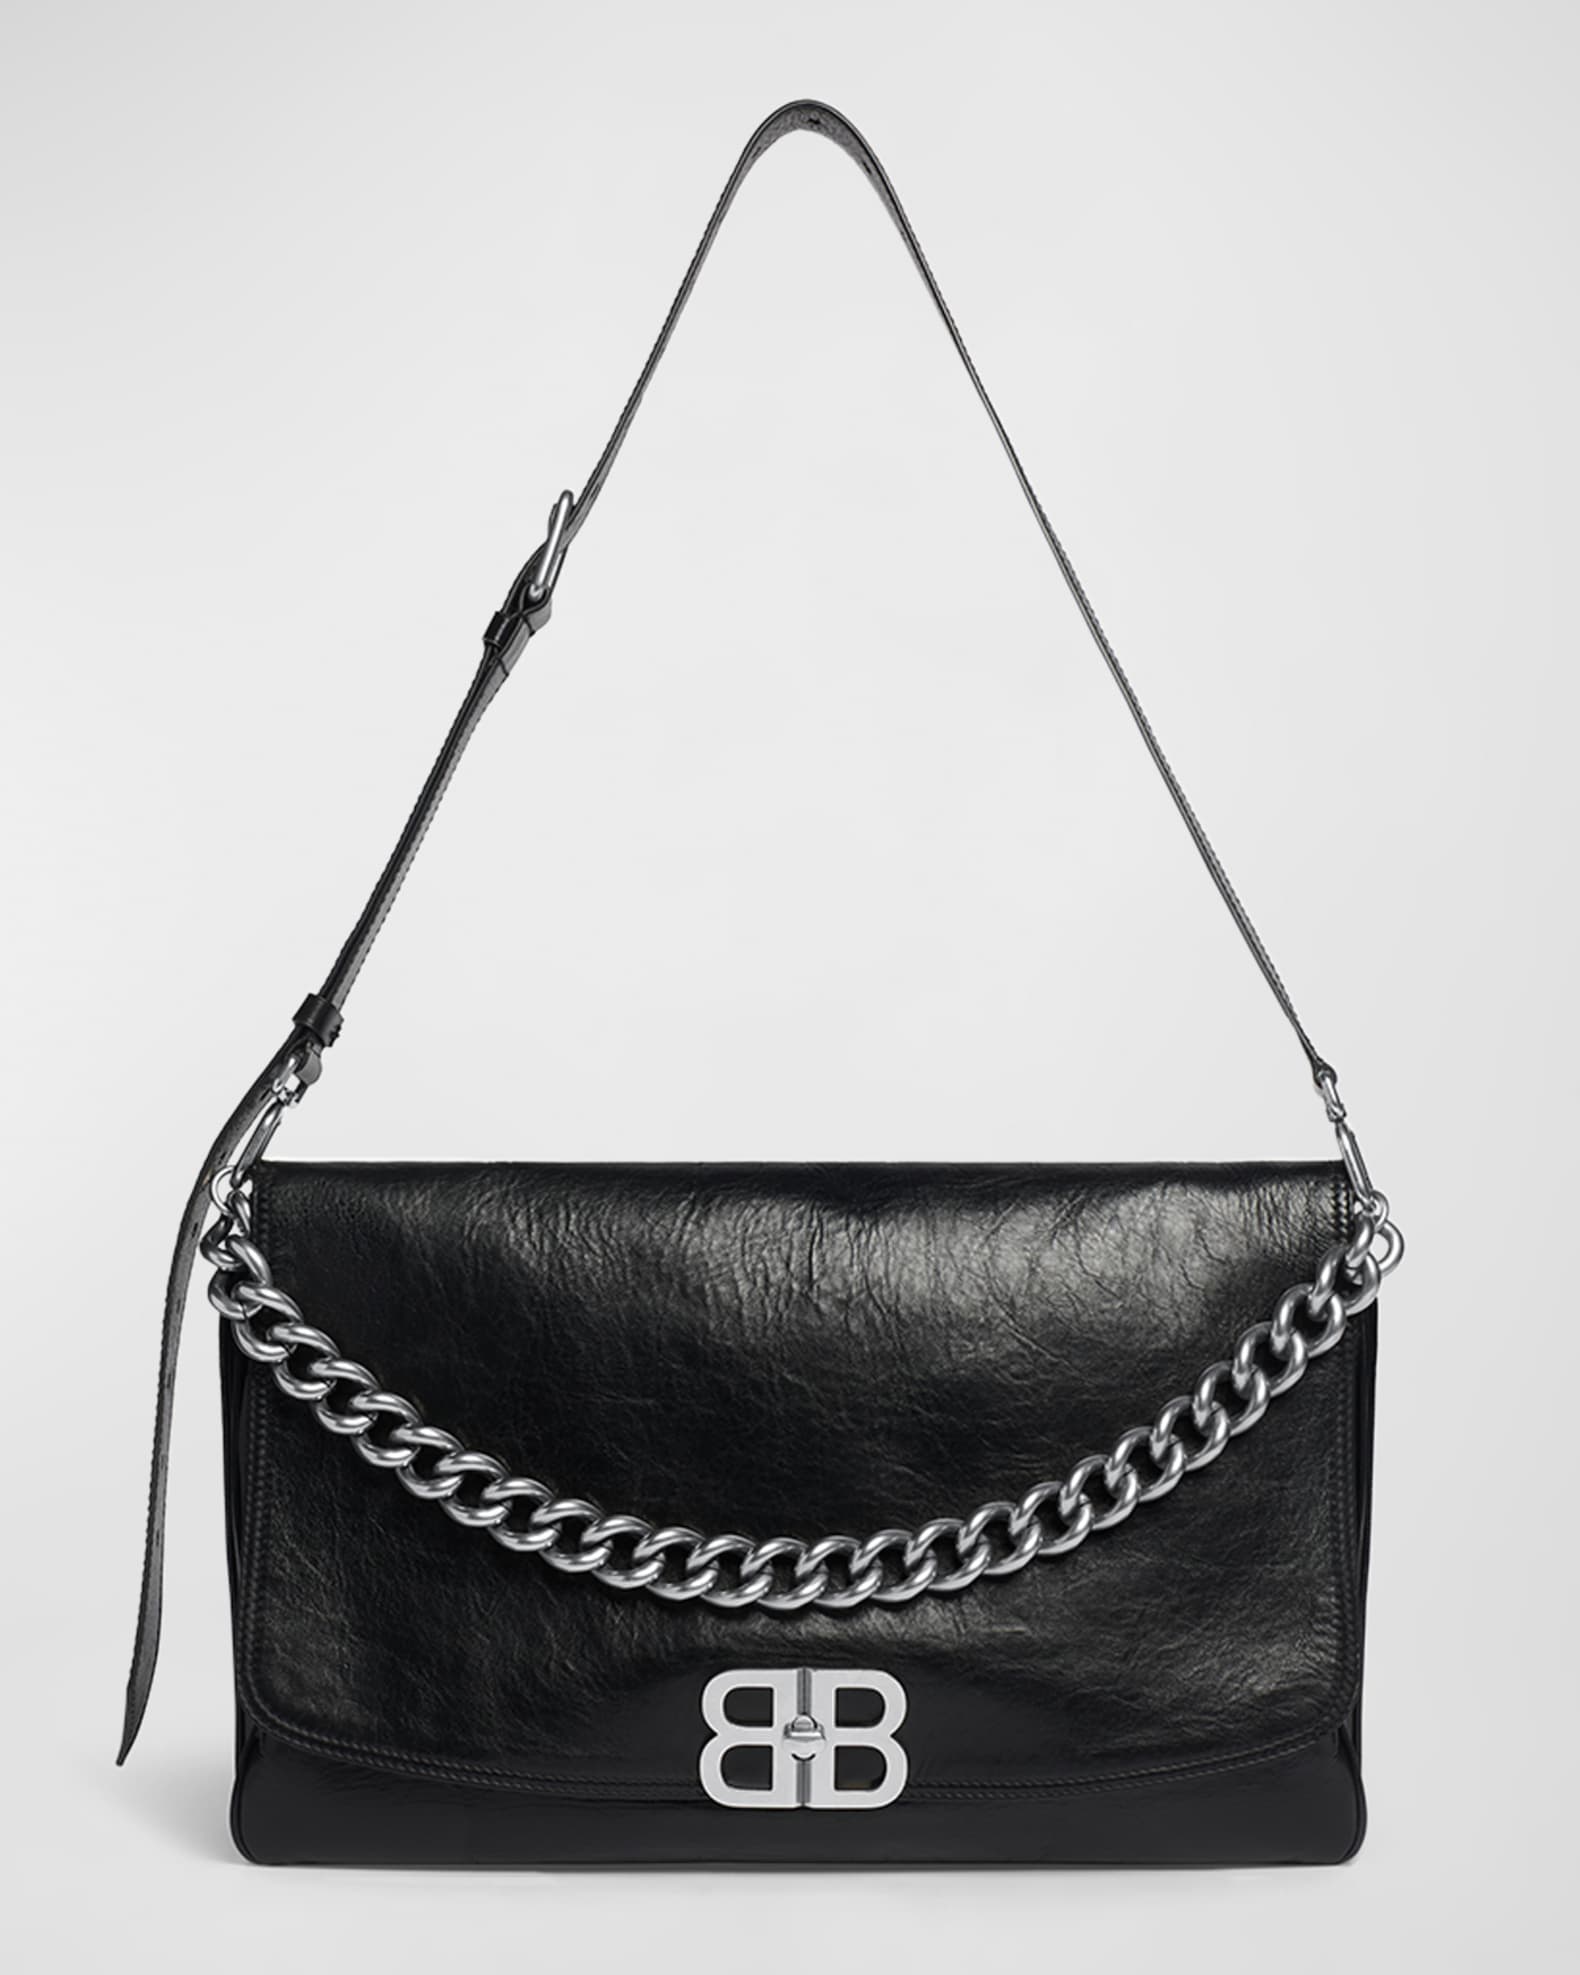 Victoria'/s Secret Women's Shoulder Bag Crossbody Small Square Handbag  Chain High Quality PU Leather